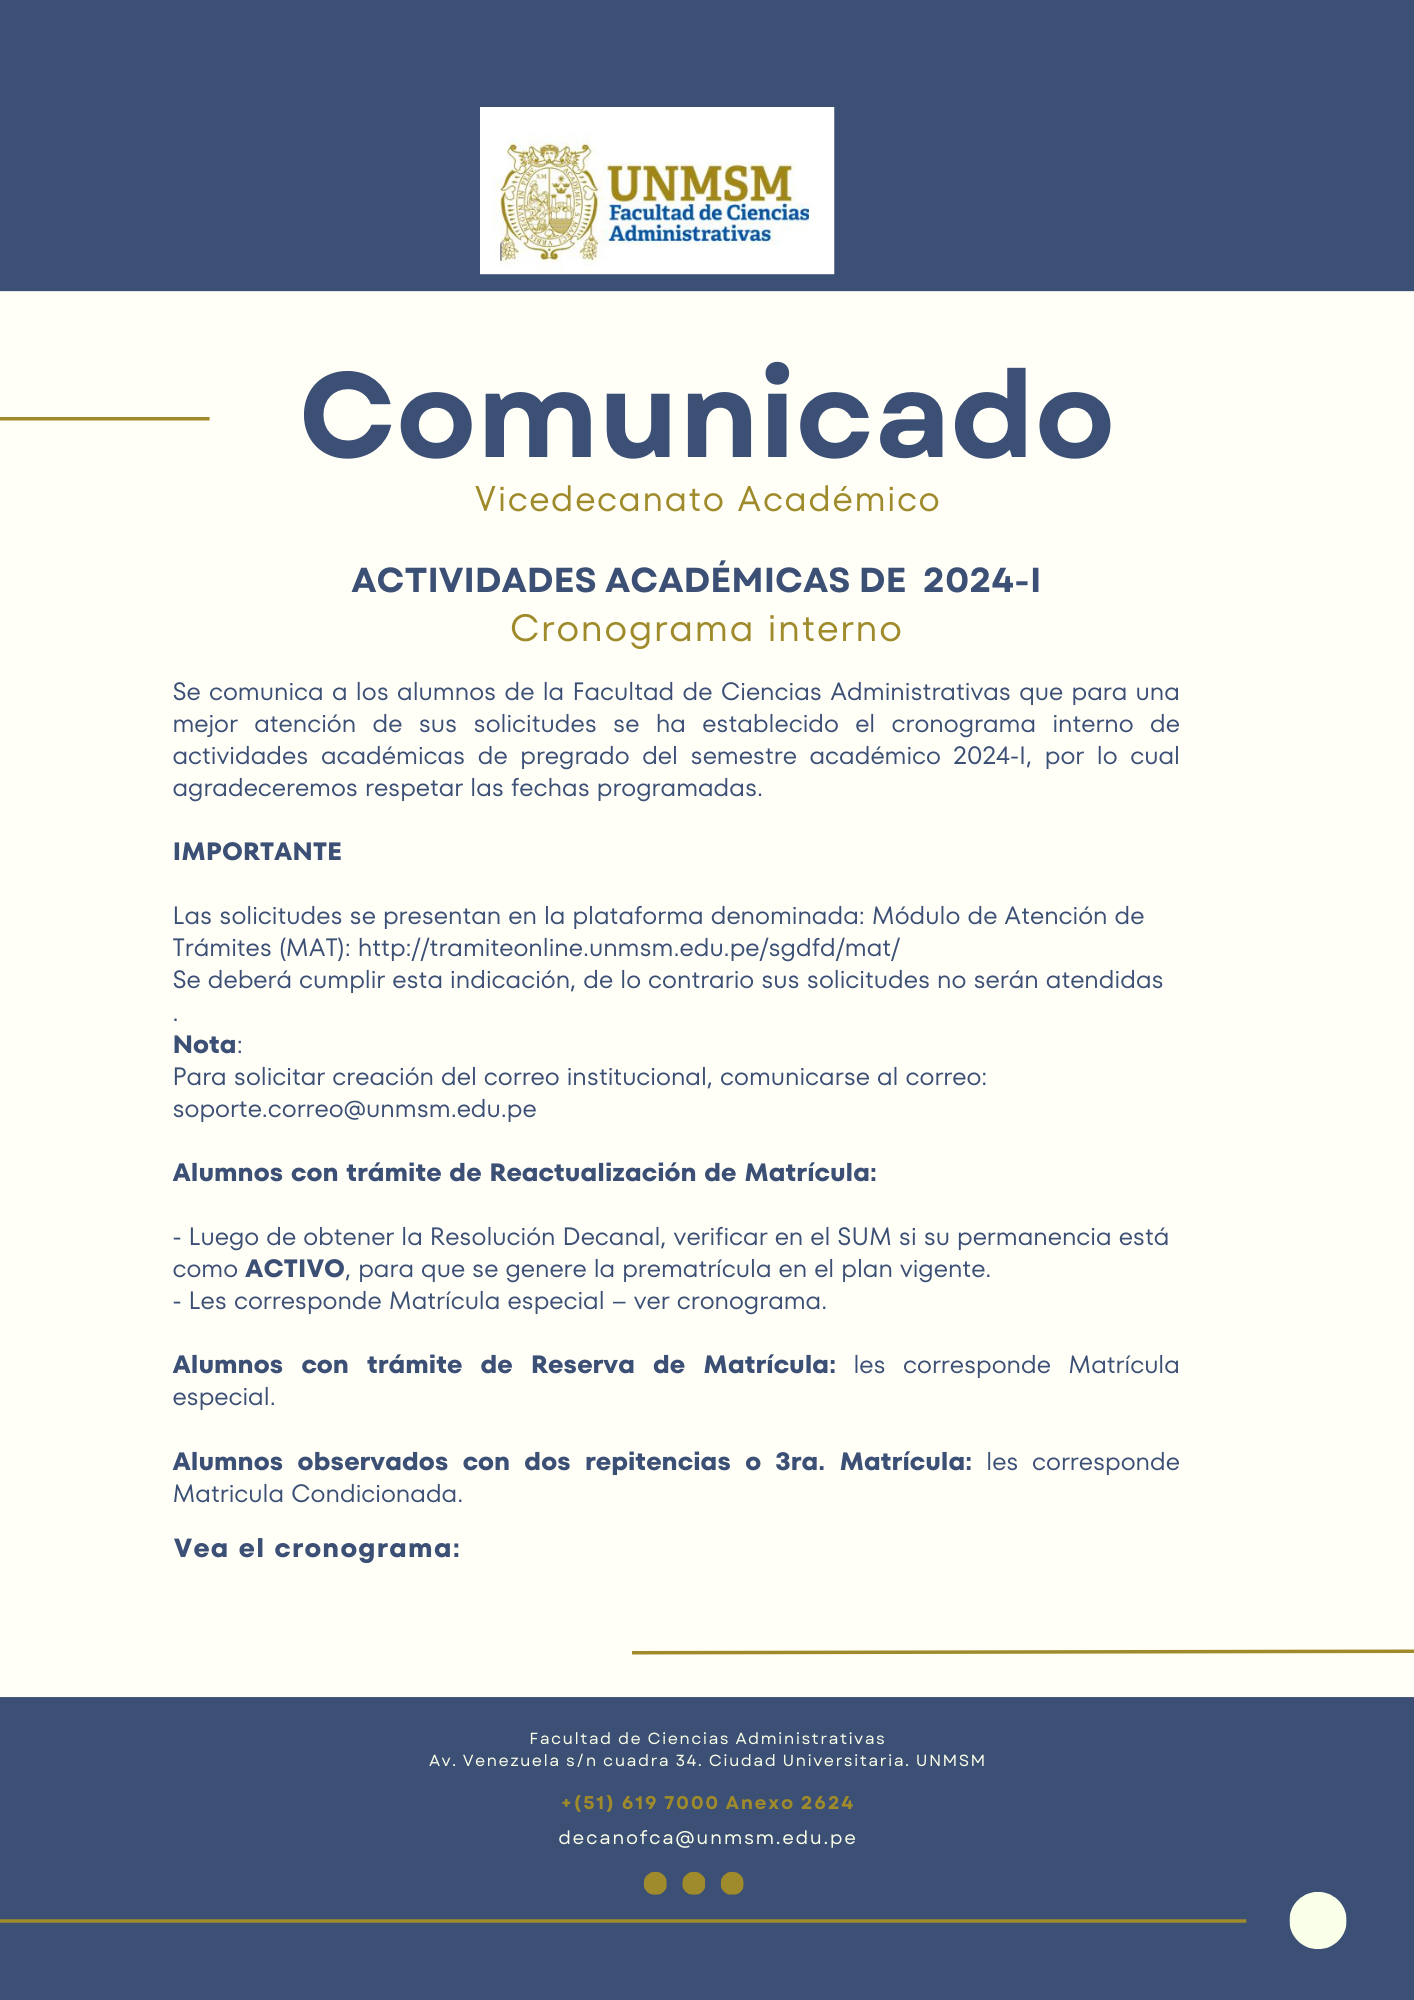 Cronograma interno: Actividades académicas 2024-I